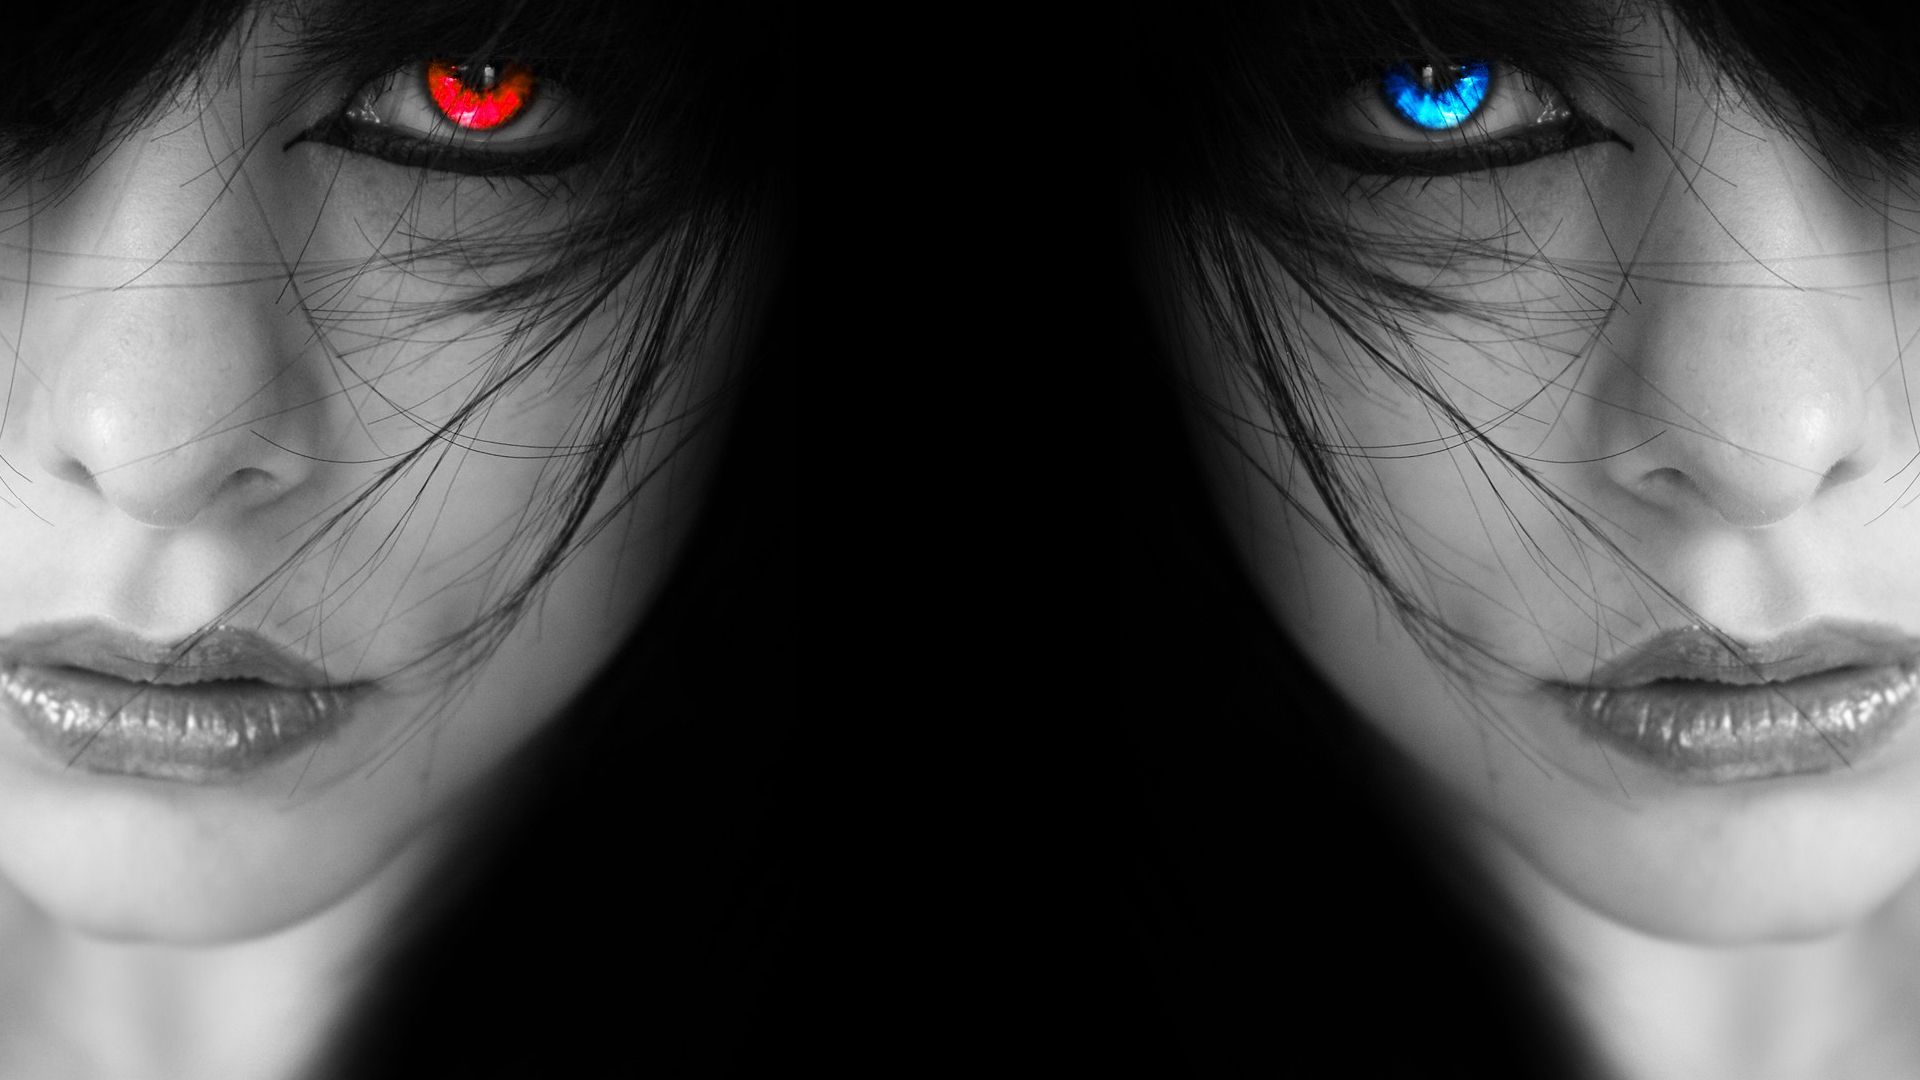 Girl Red and Blue Eyes HD Wallpaper 1080p. Eyes wallpaper, White eyes, Photo manipulation